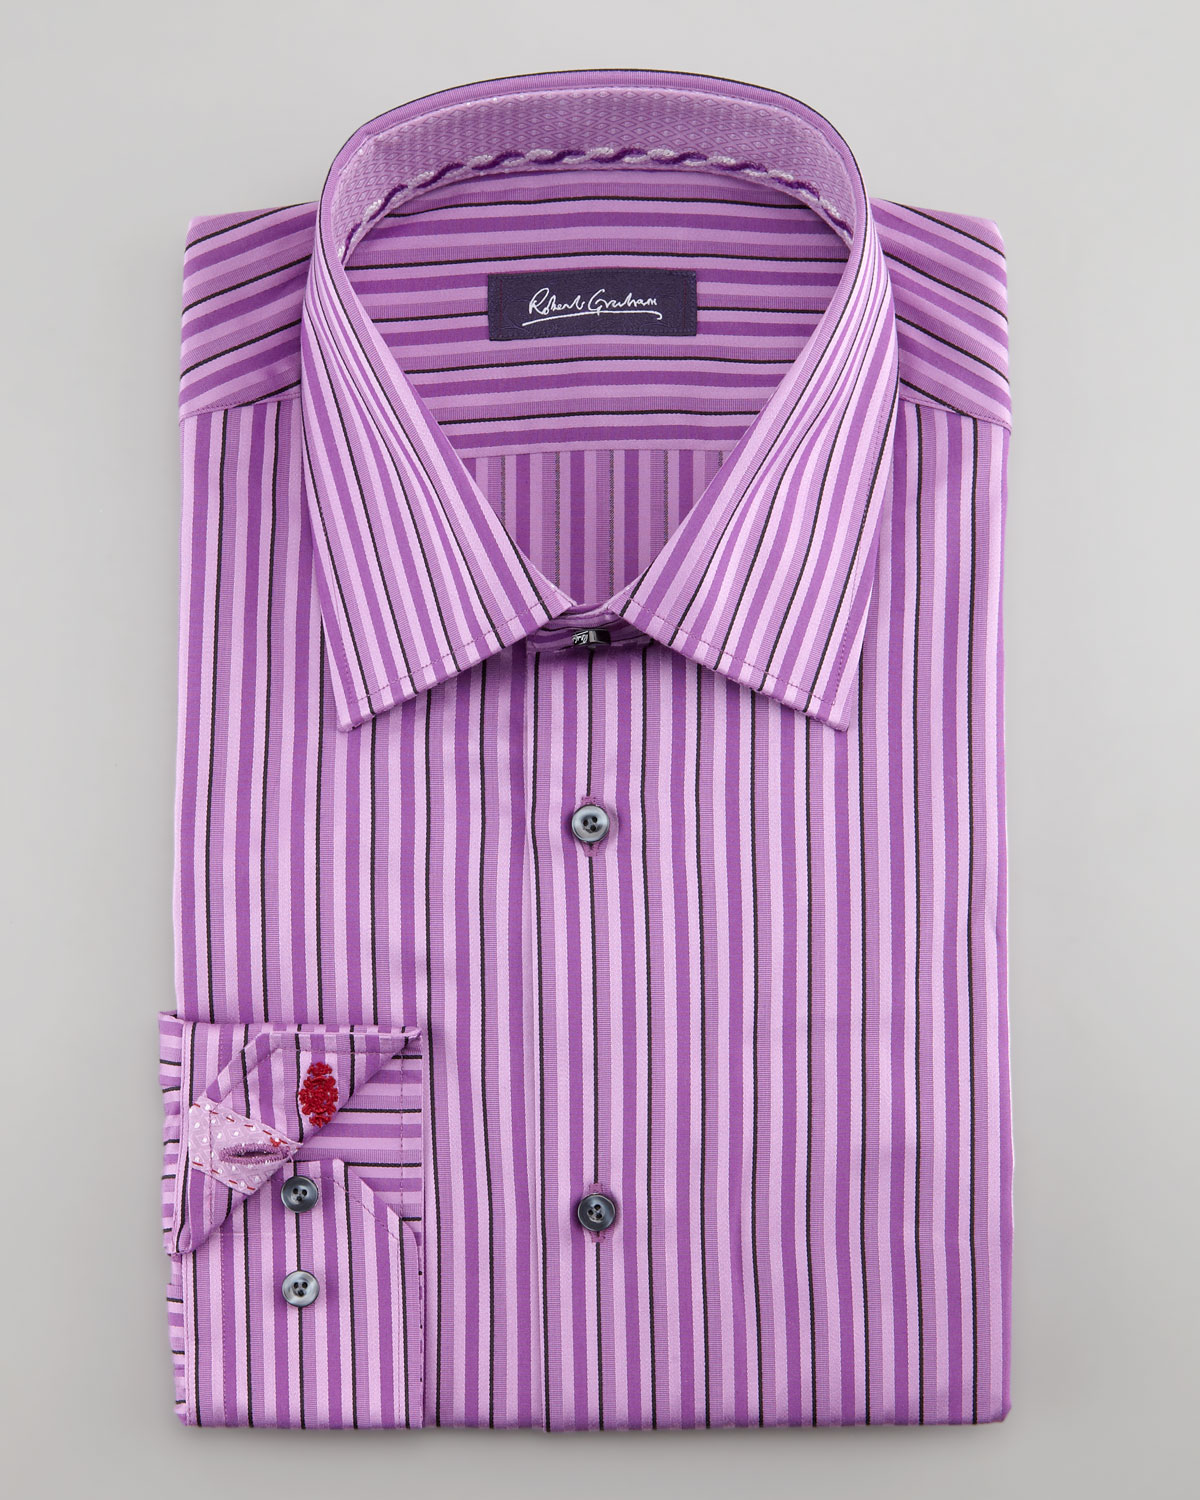 Lyst - Robert Graham Daly Striped Dress Shirt Purple in Purple for Men